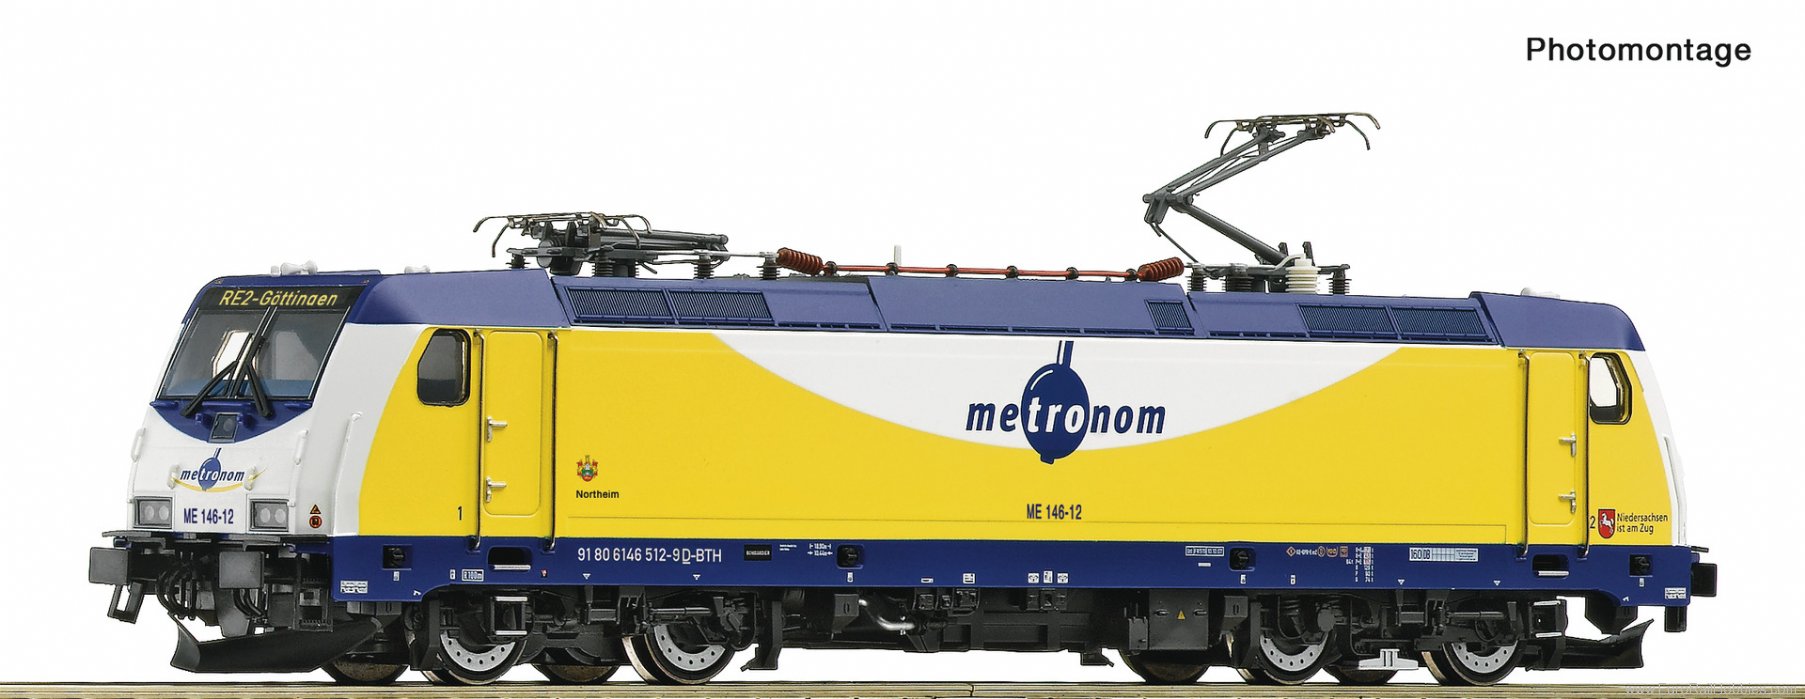 Roco 7500037 Electric locomotive ME 146-12, metronom (DC A